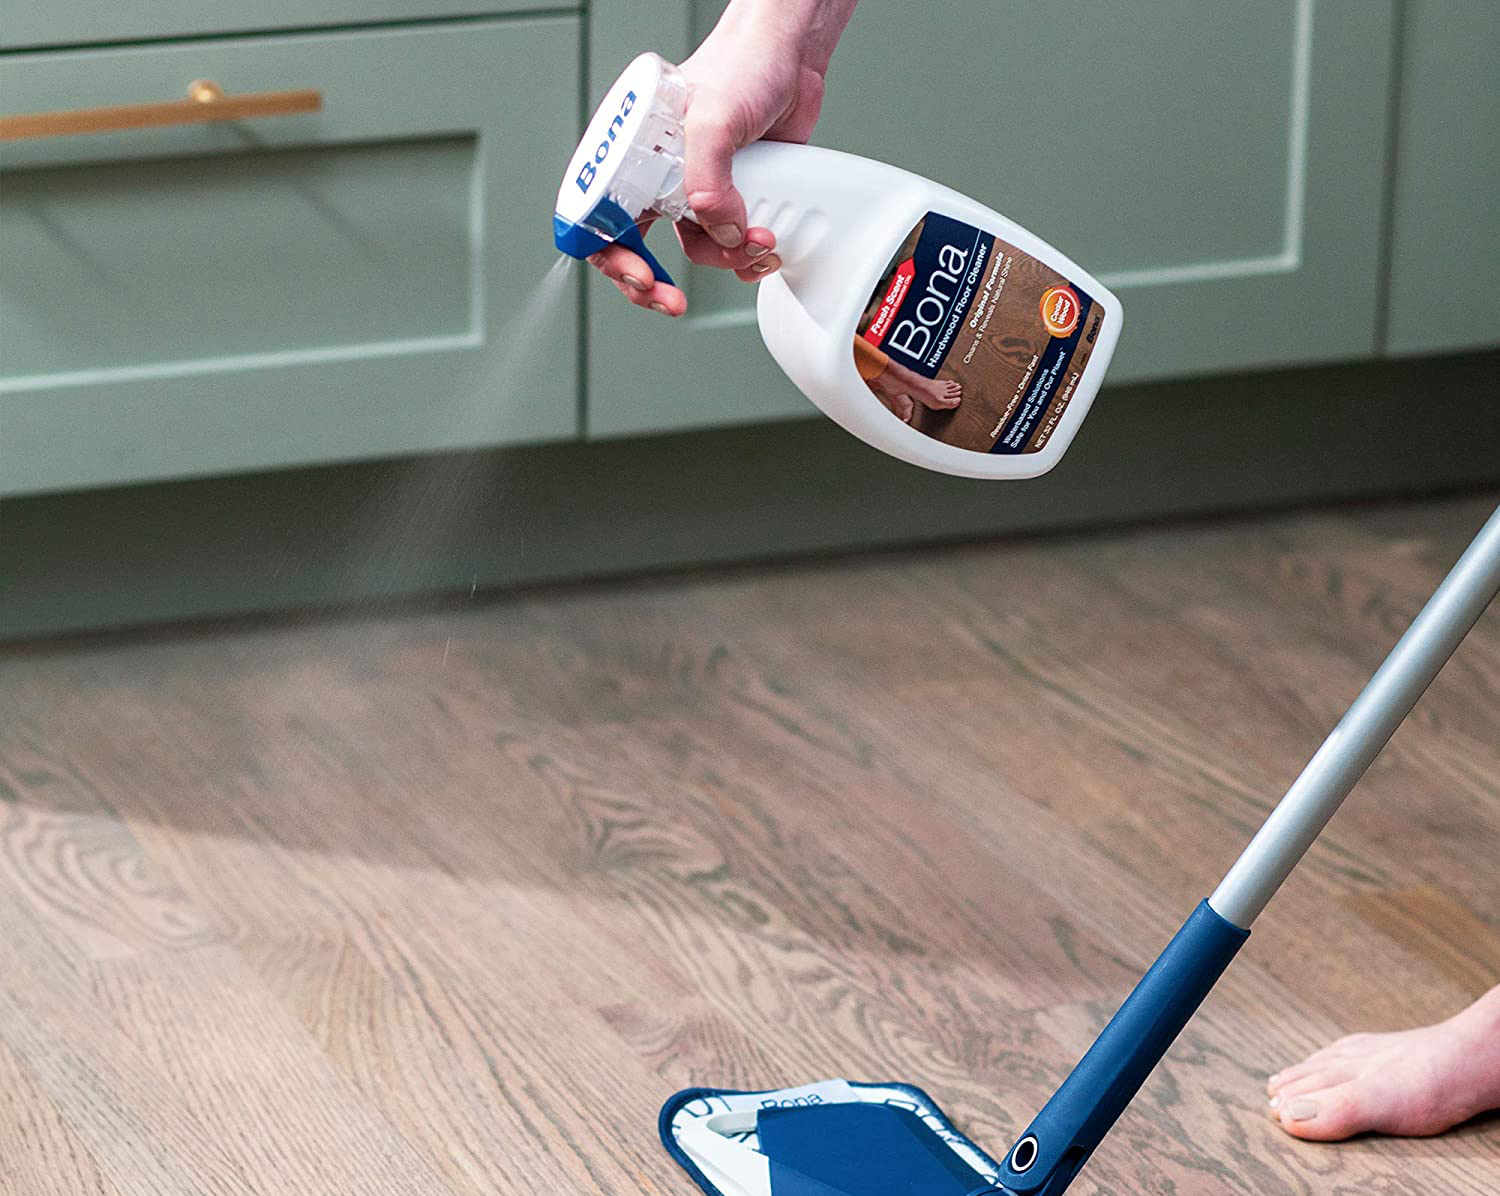 Best floor cleaner: 19 floor cleaners to battle dust, dirt, and